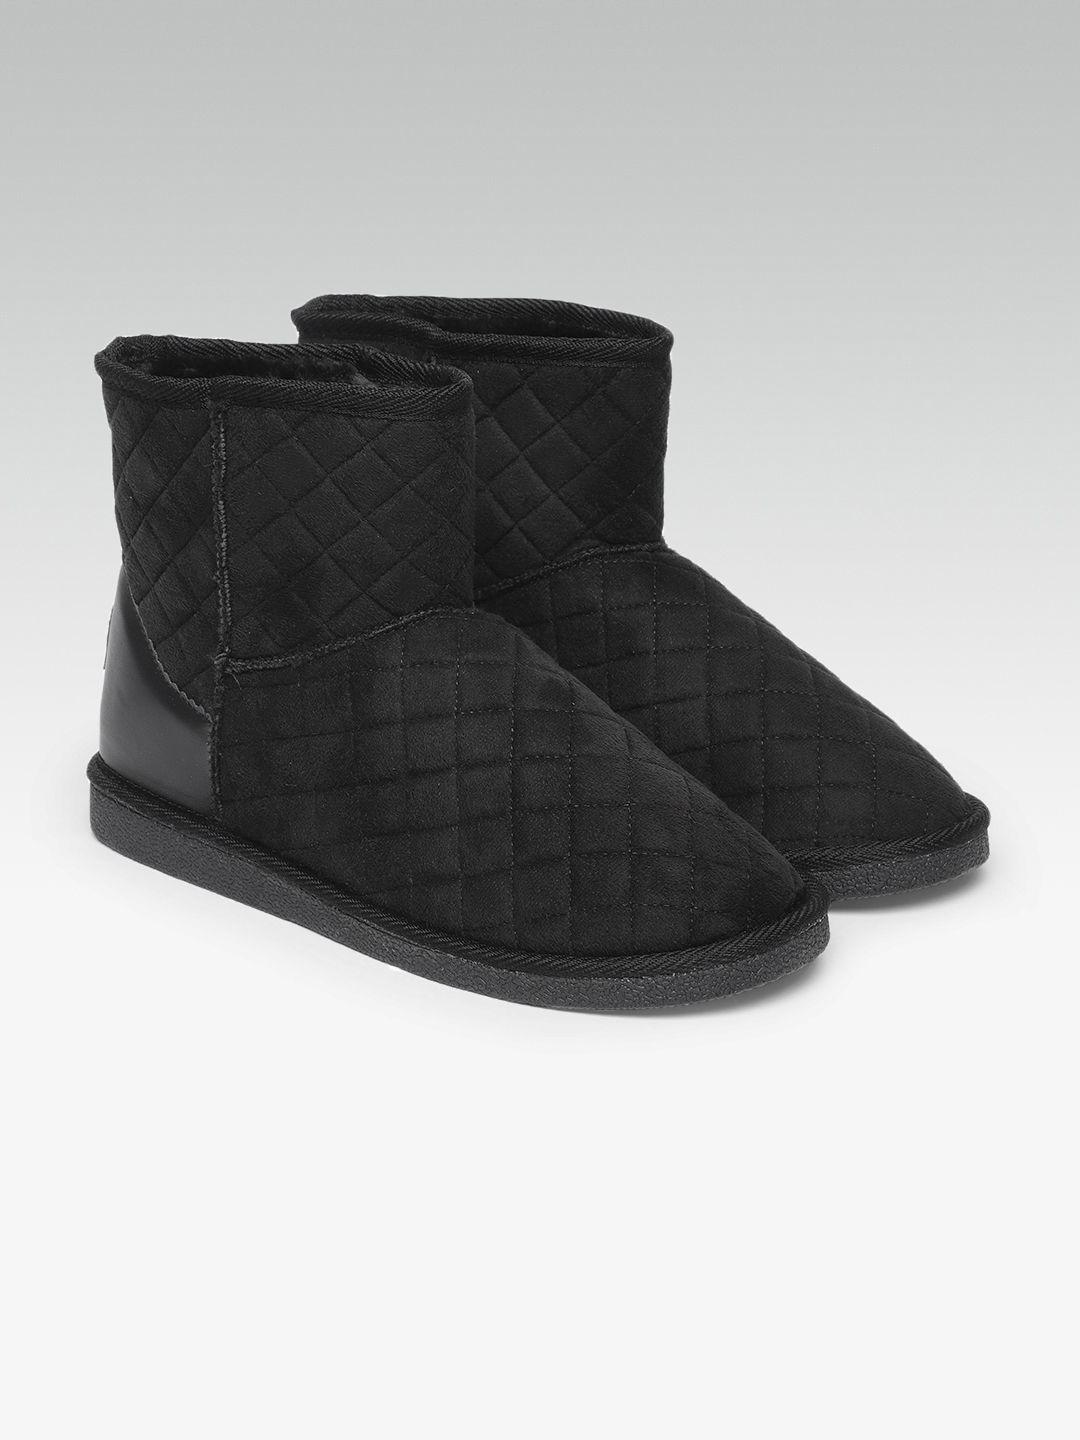 carlton-london-women-black-textured-mid-top-flat-boots